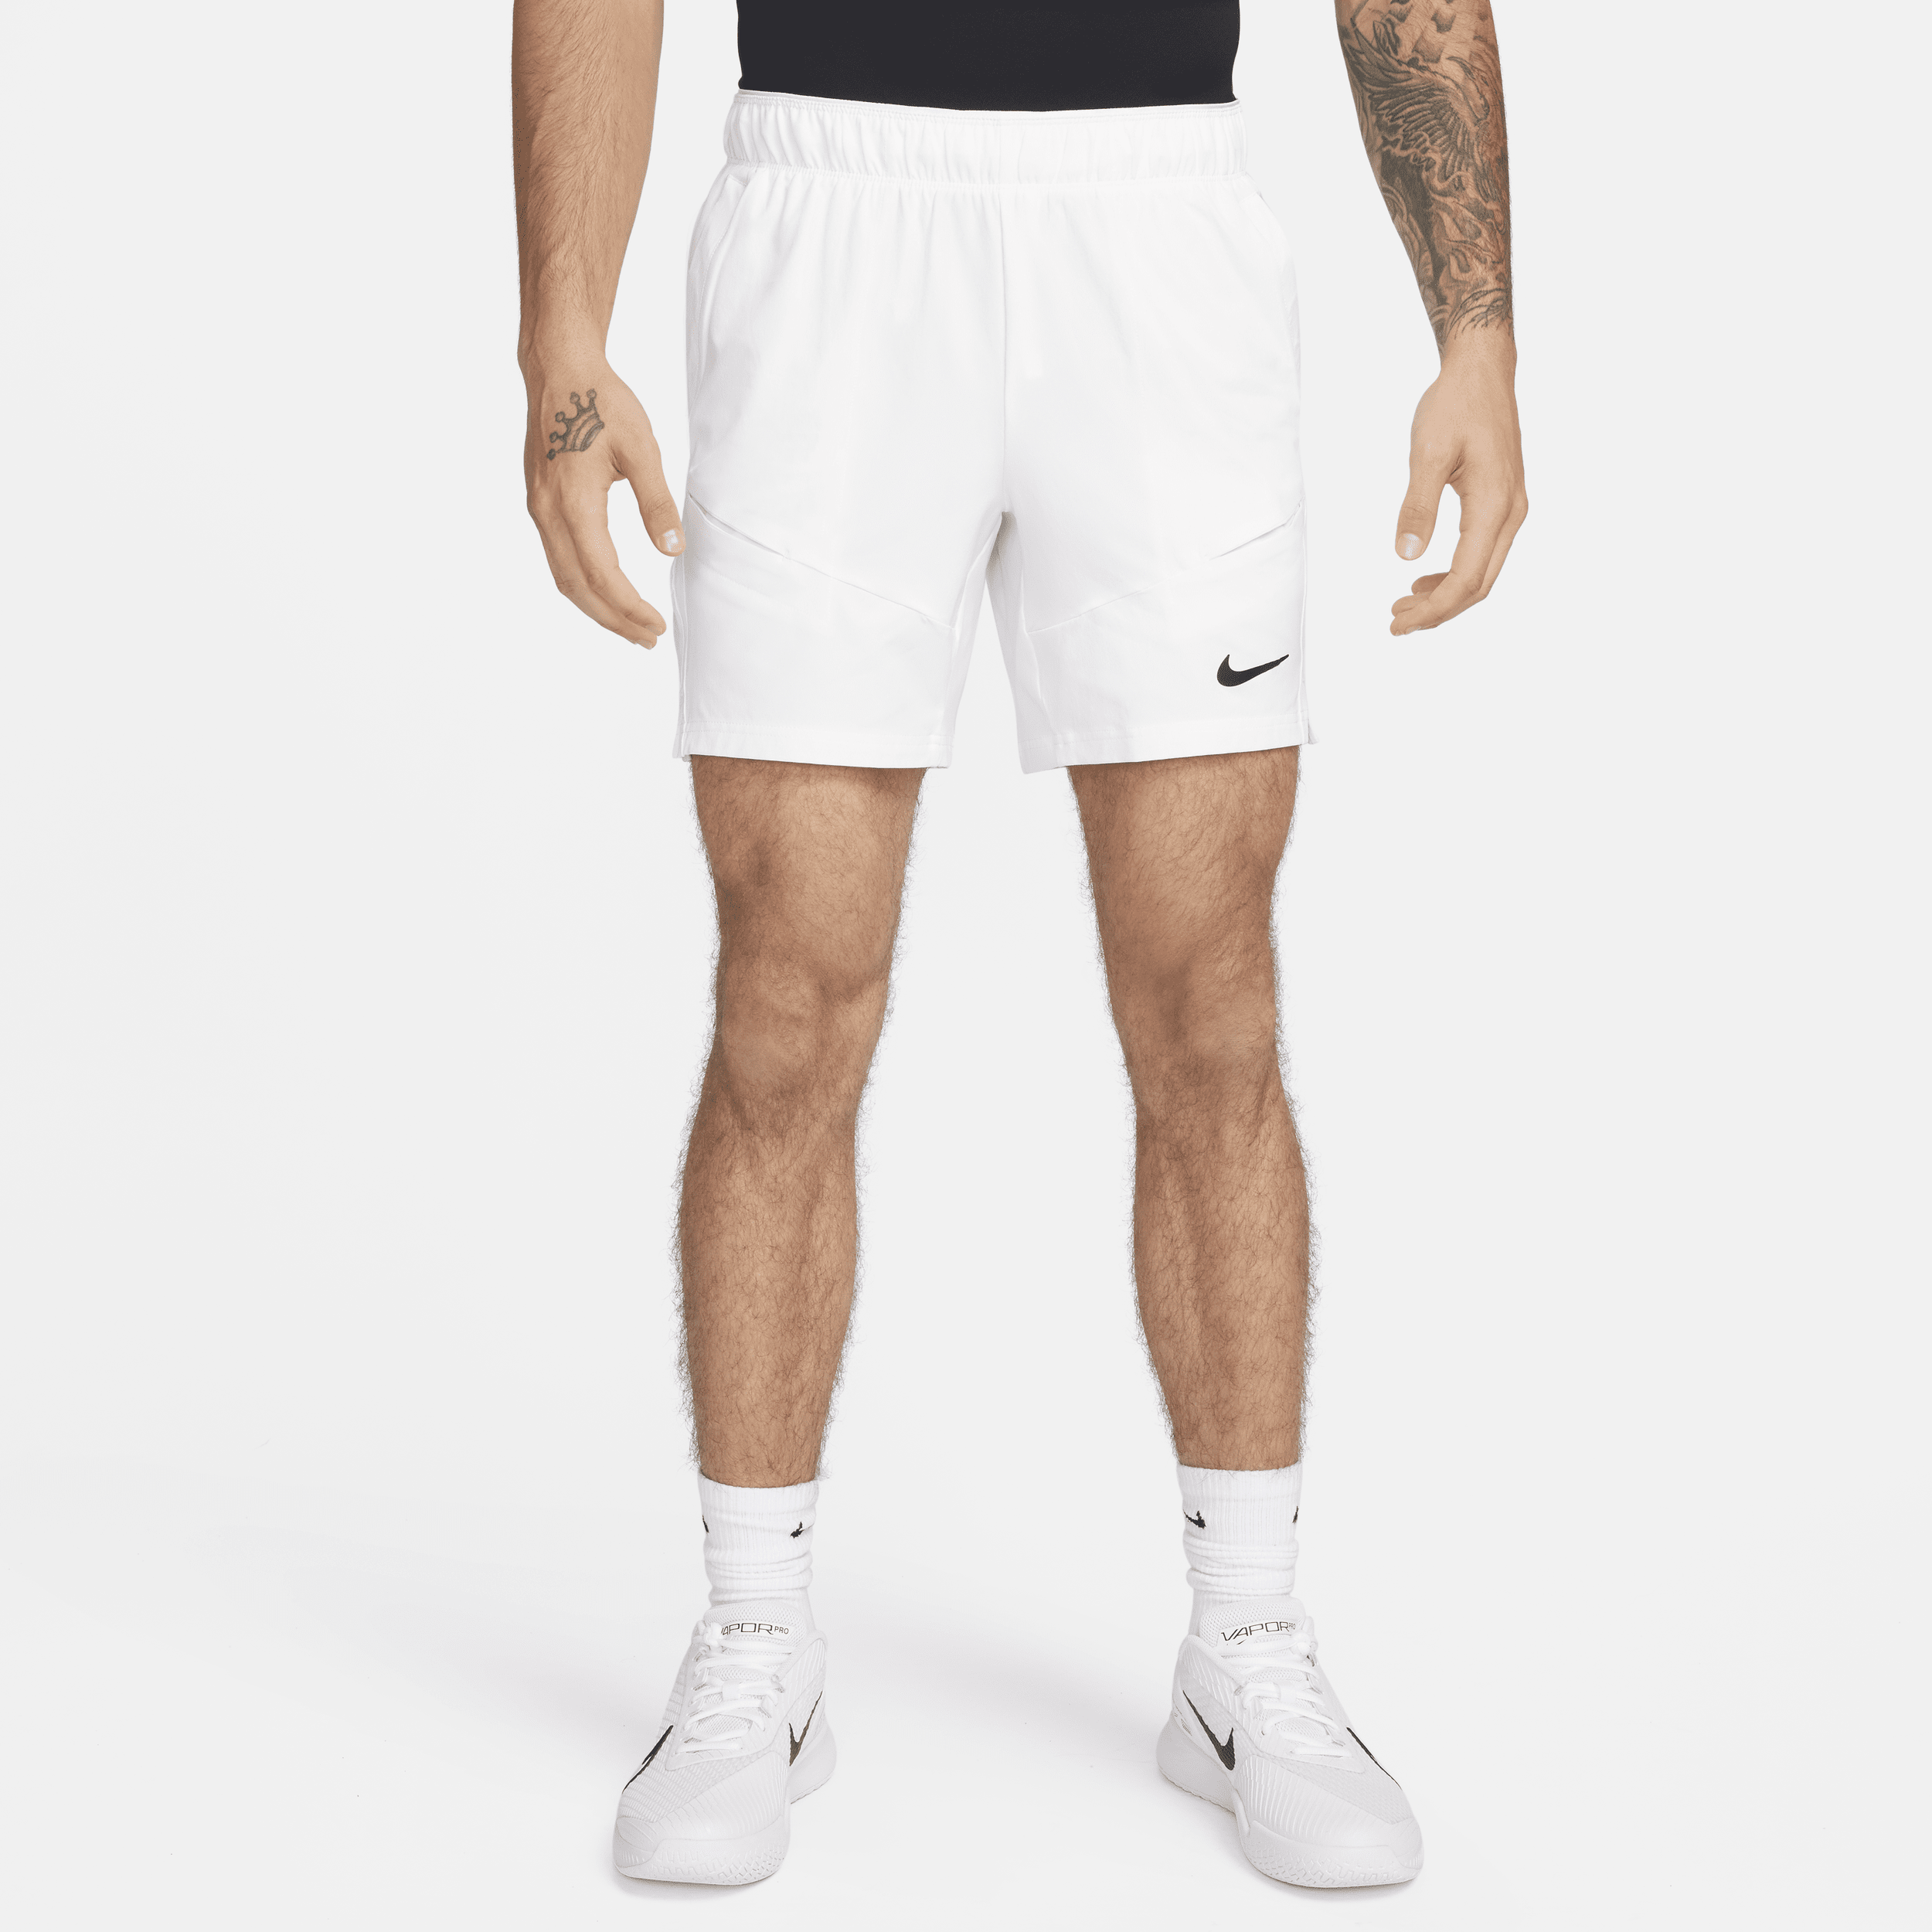 NikeCourt Advantage Pantalón corto de tenis de 18 cm Dri-FIT - Hombre - Blanco